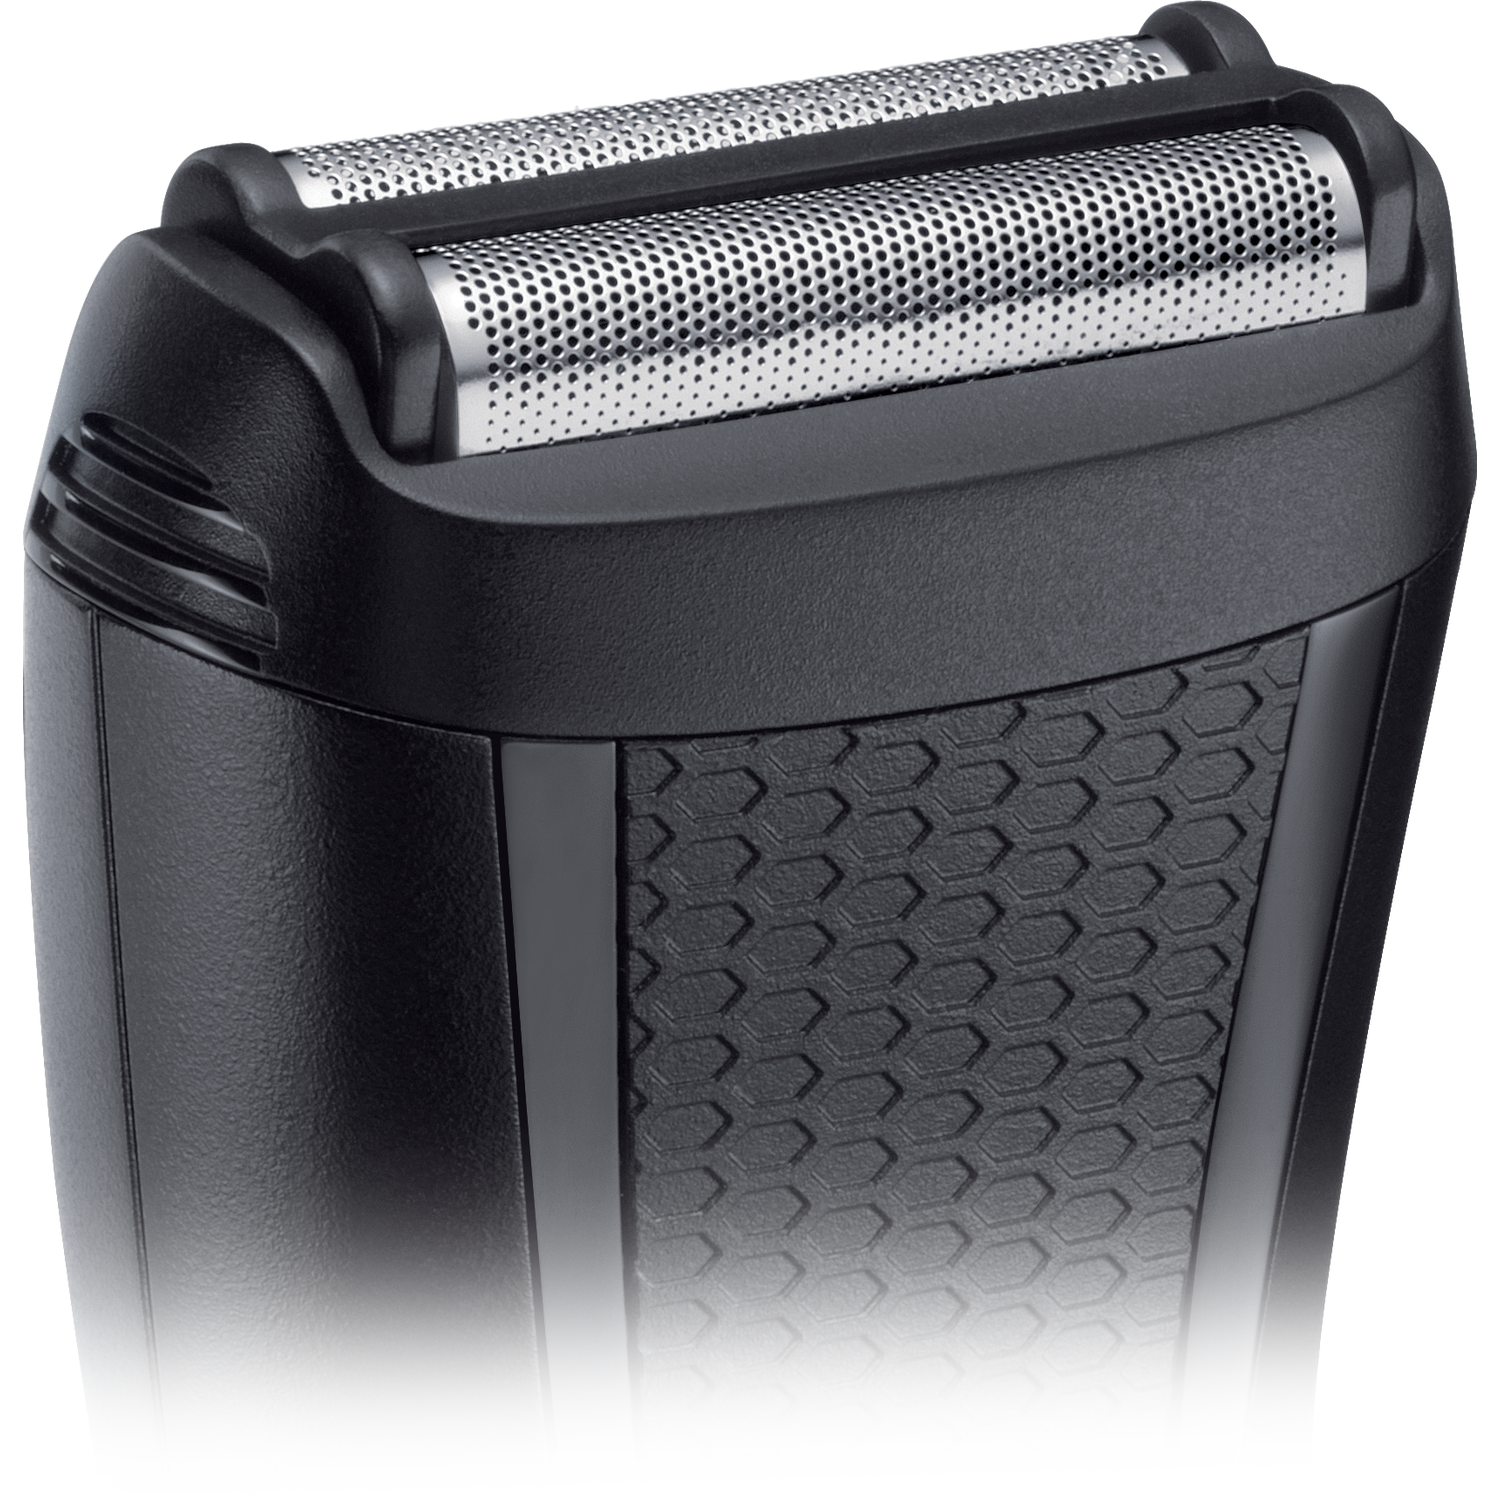 Remington F2 Style Series Foil Shaver - Black Image 4